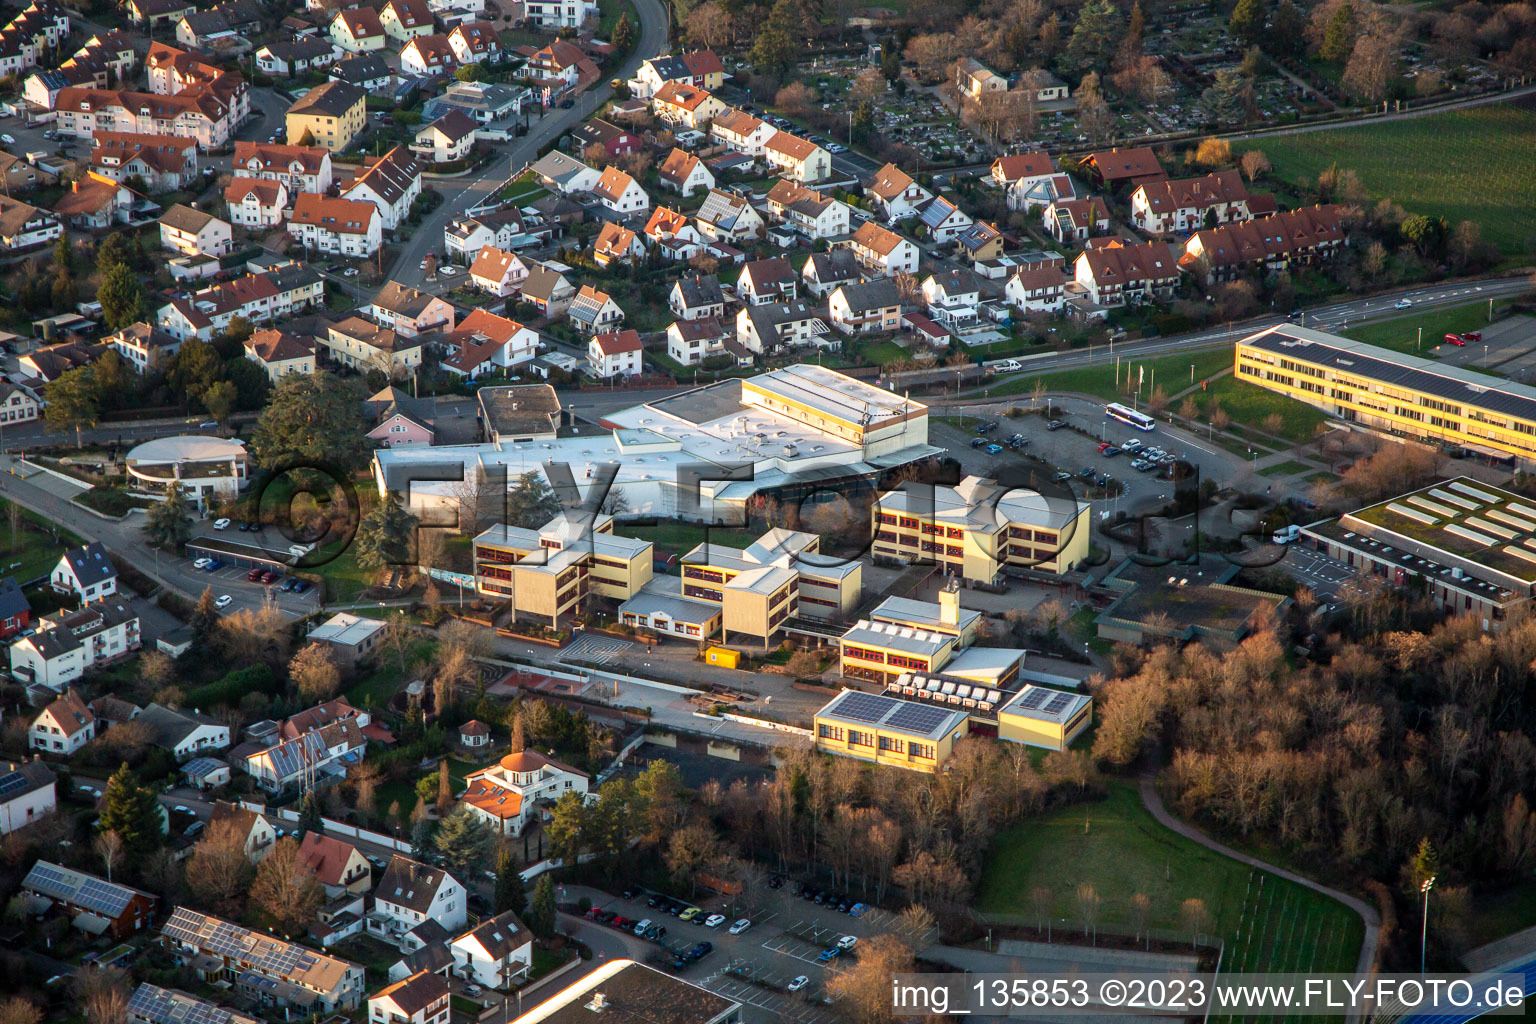 Paul-Gillet-Realschule plus, Weinstrasse; High school and large sports hall Edenkoben in Edenkoben in the state Rhineland-Palatinate, Germany